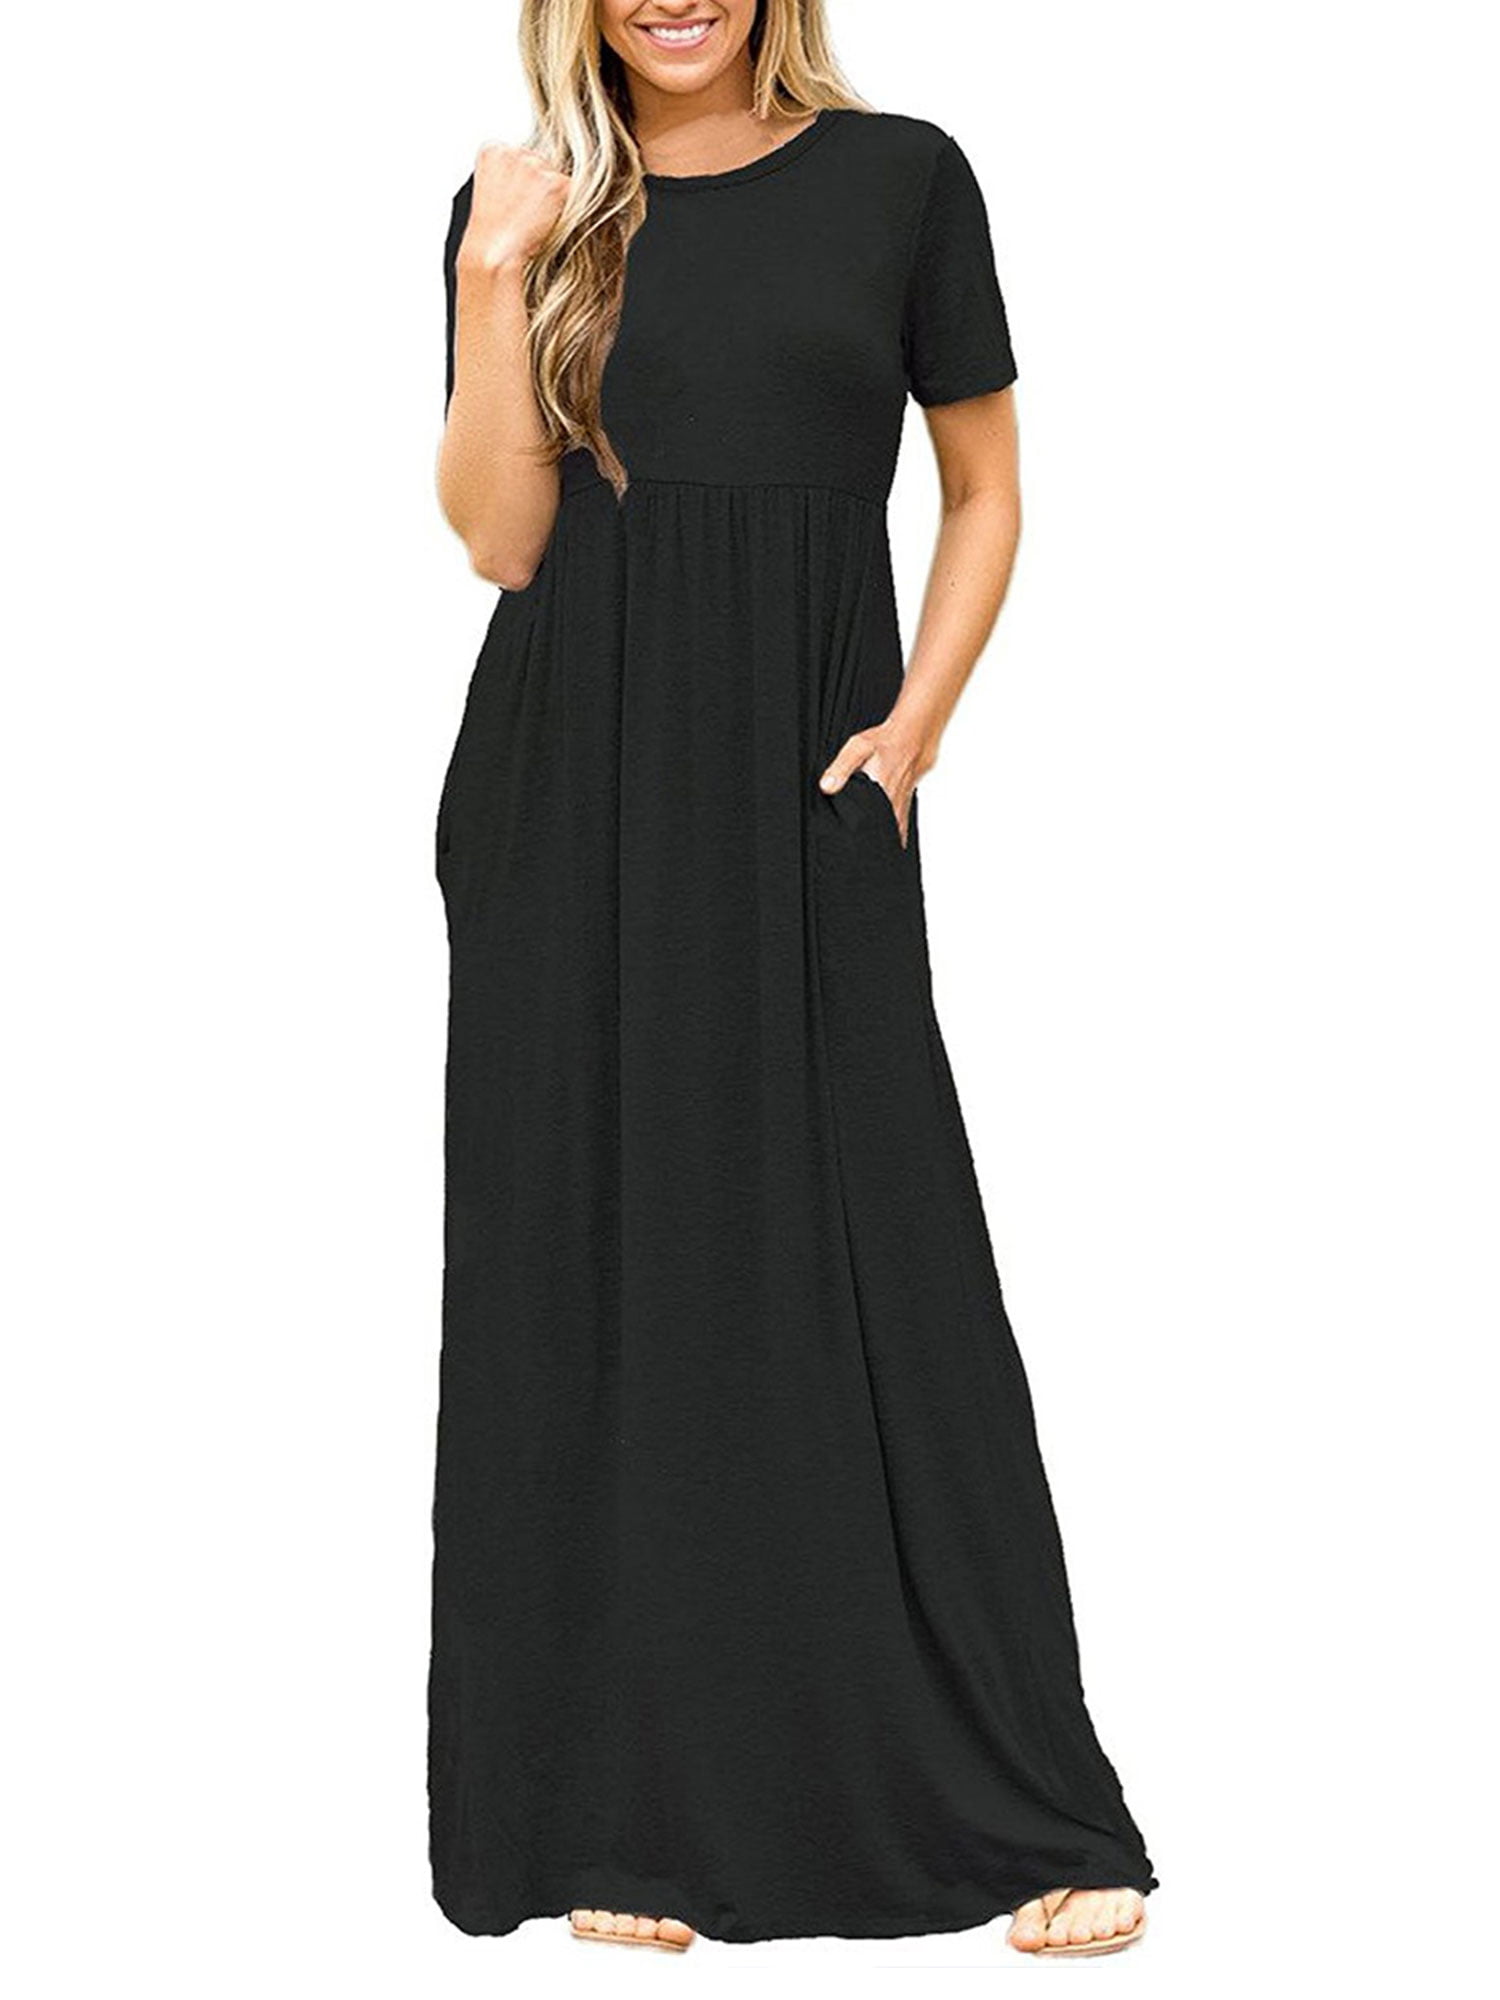 KEDUDES Women Long Maxi Dress Casual Plus Size Fashion Dresses Baggy Black